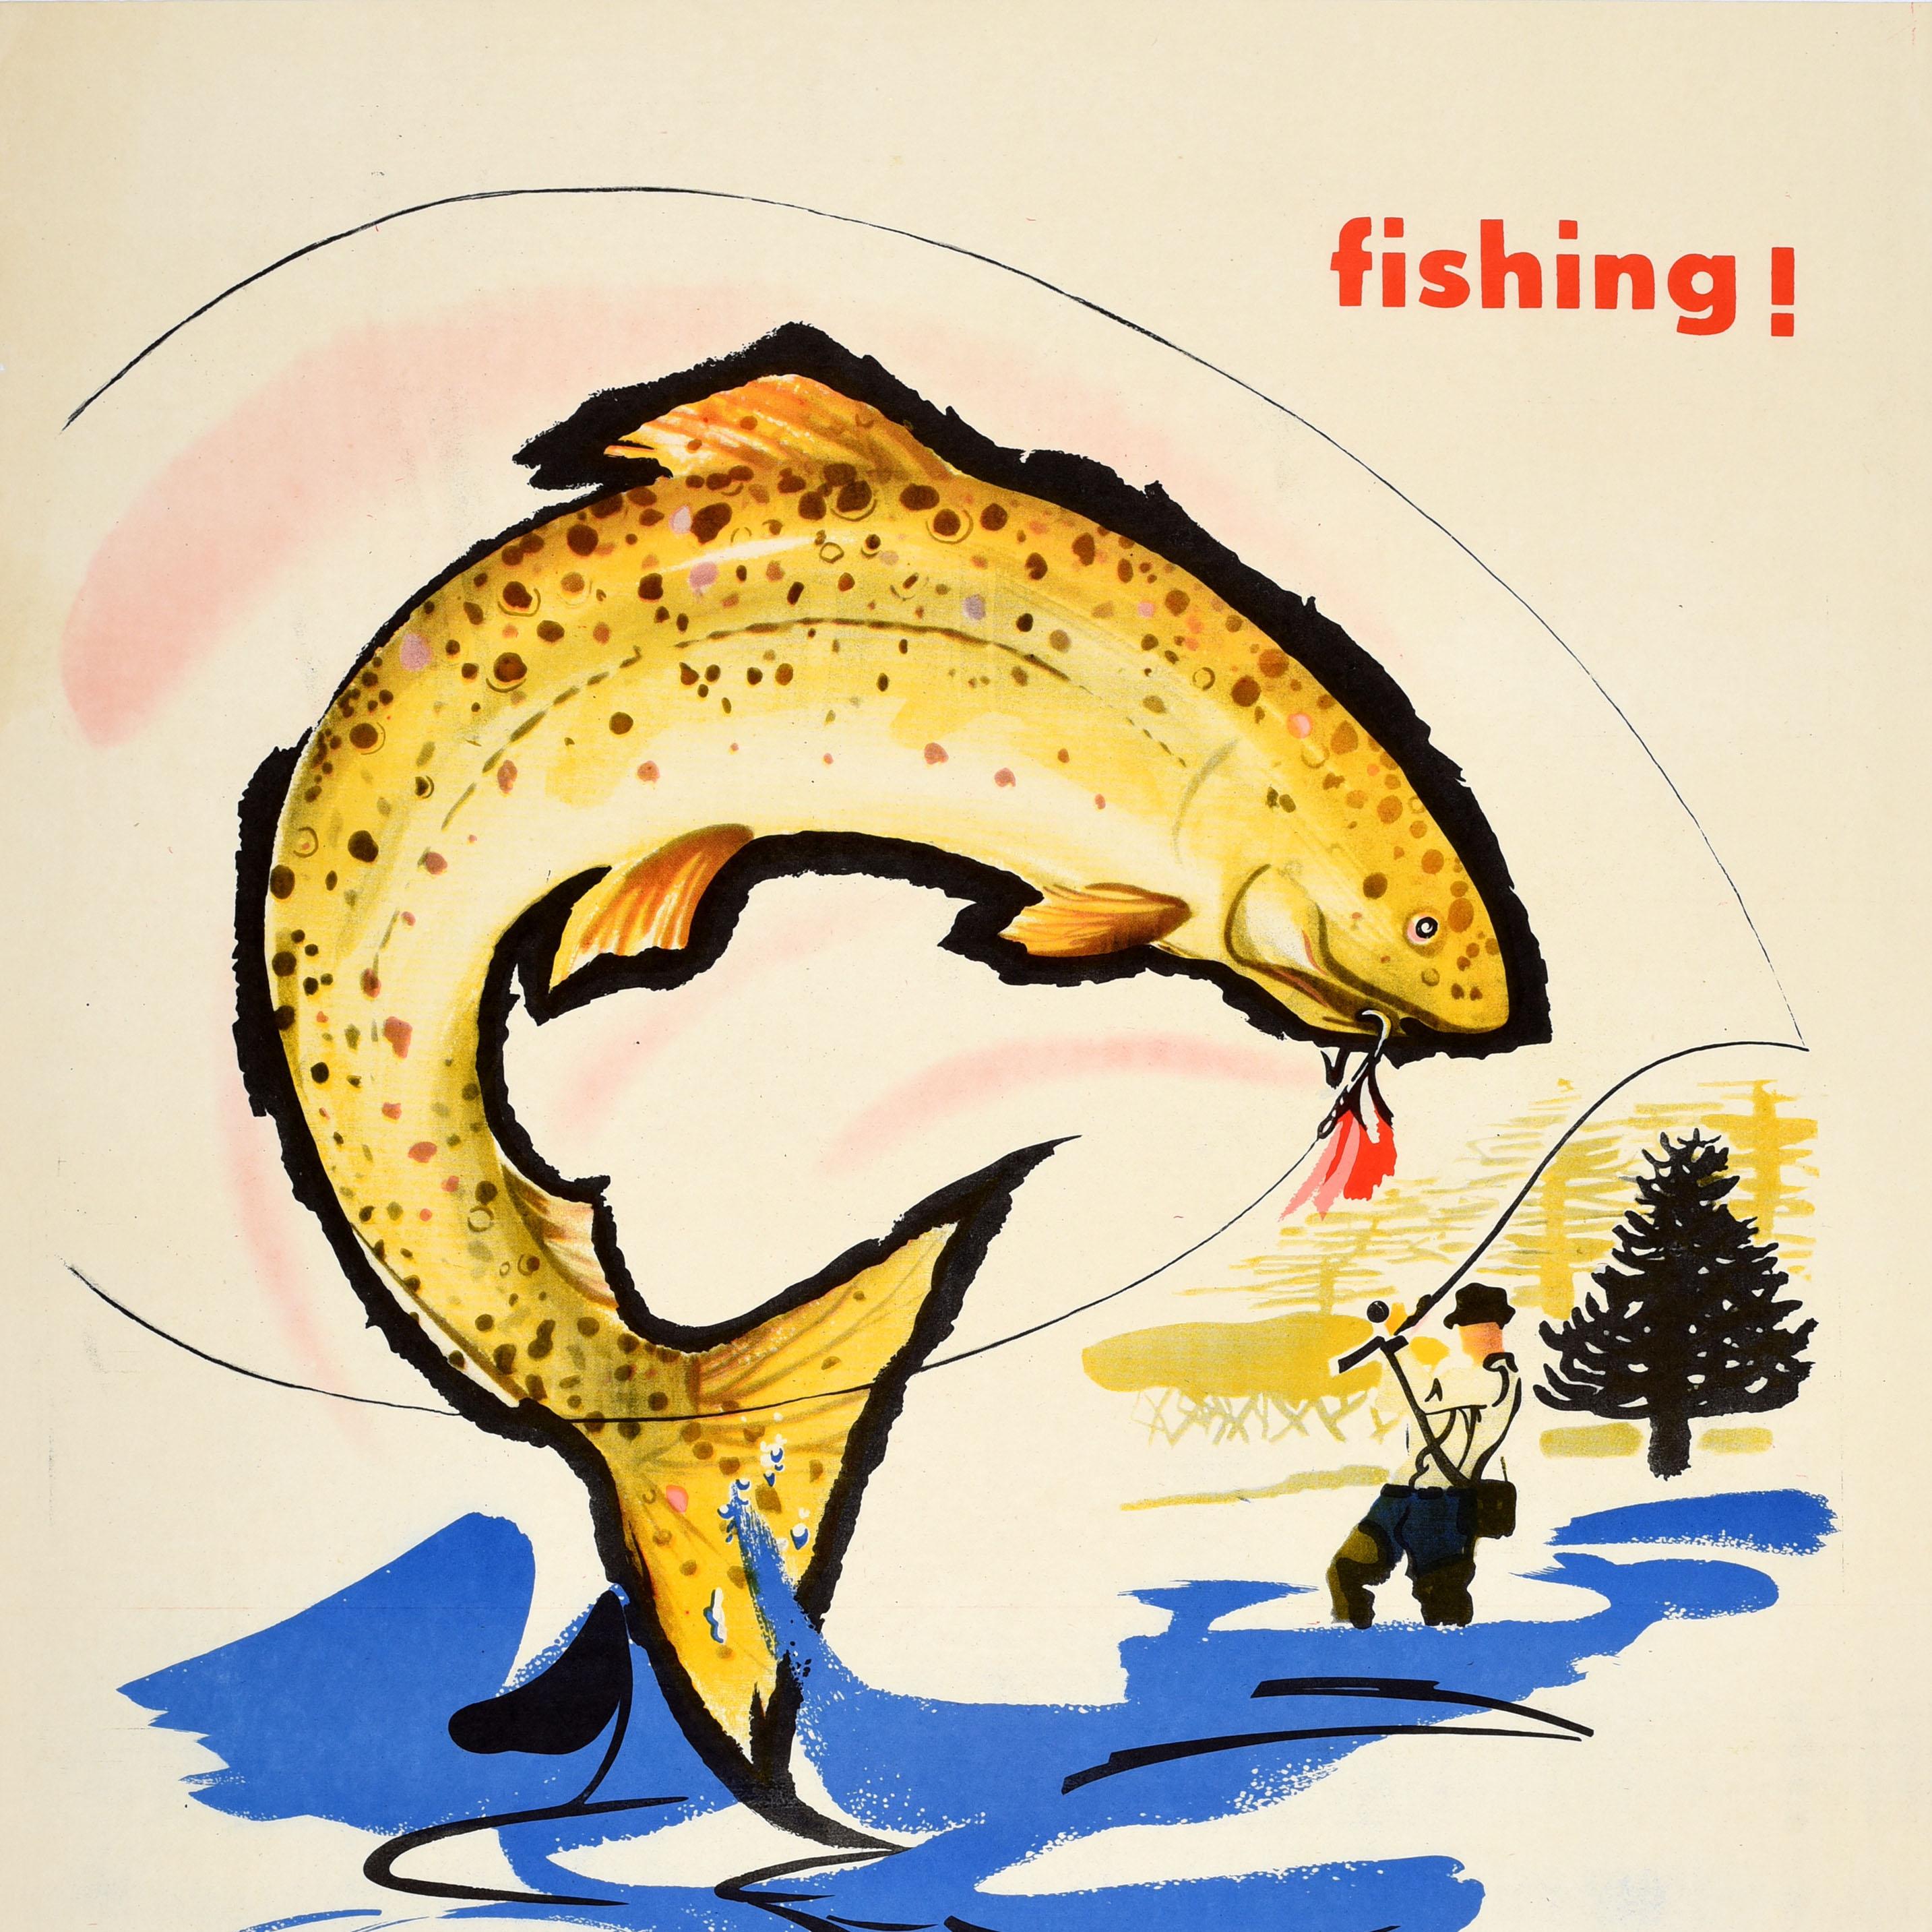 Argentine Original Vintage Travel Poster Fly Fishing Argentina Tourism Trout Fisherman For Sale